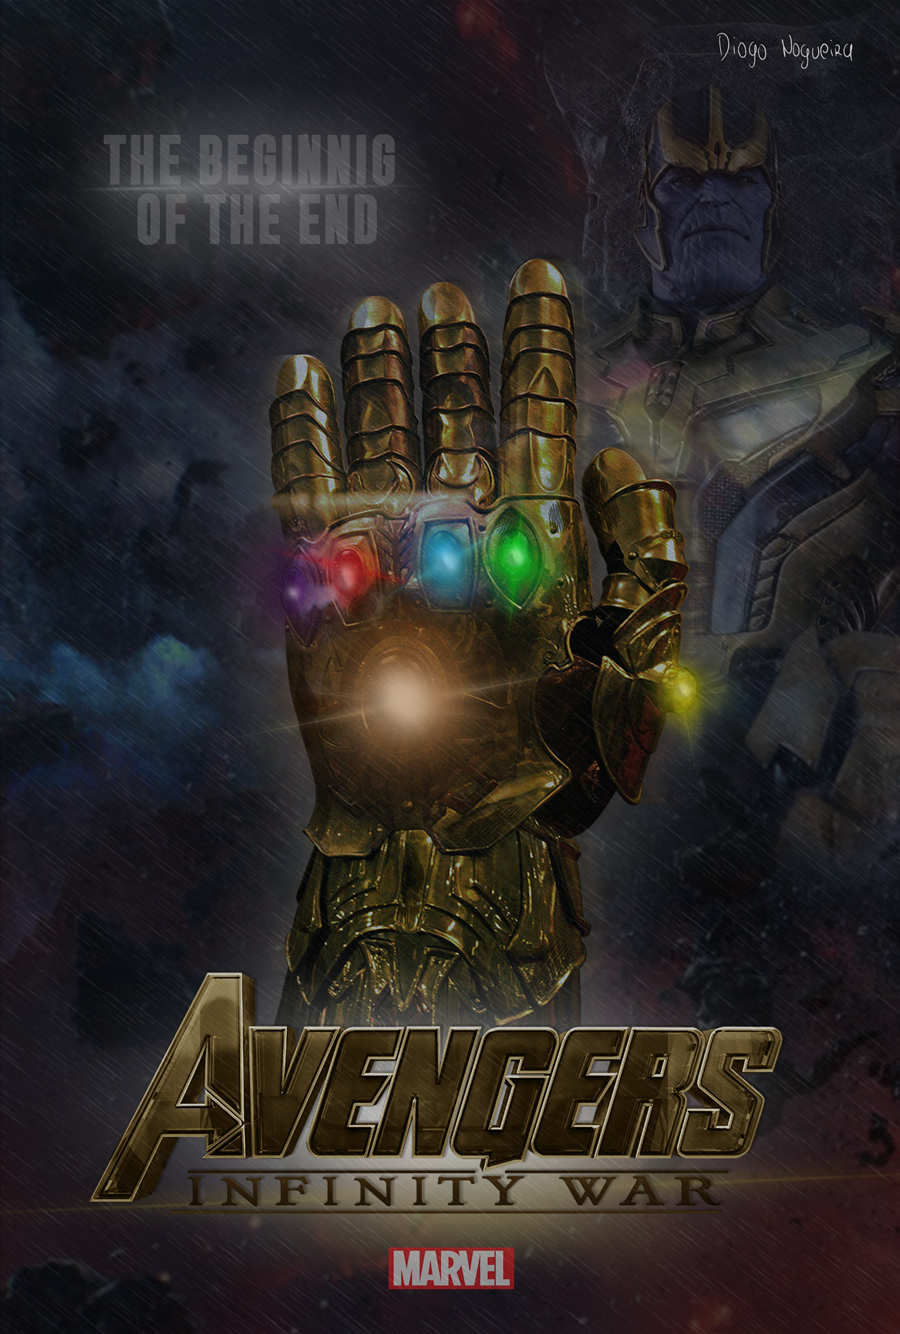 Thanos – Avengers: Infinity War by diogosnog on DeviantArt